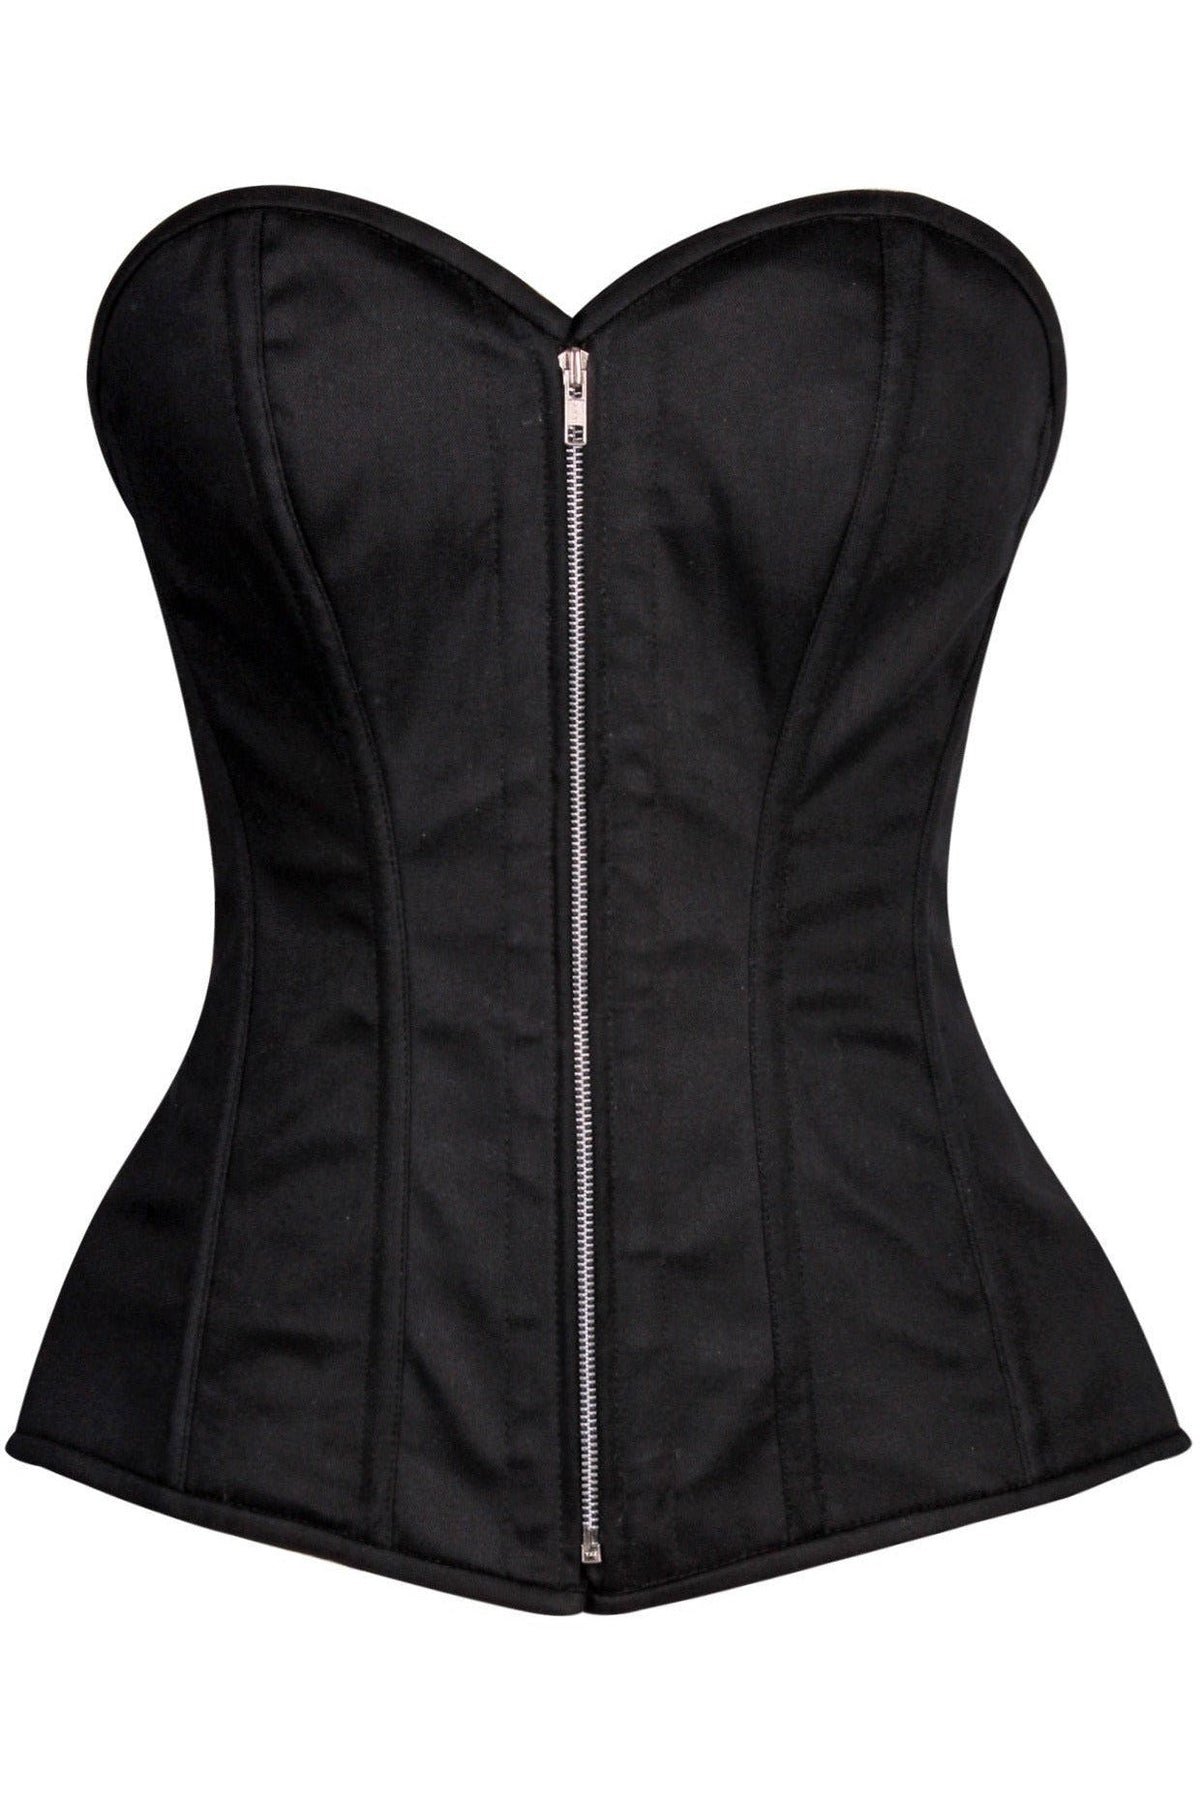 Top Drawer Black Cotton Steel Boned Corset w/Zipper – Unspoken Fashion